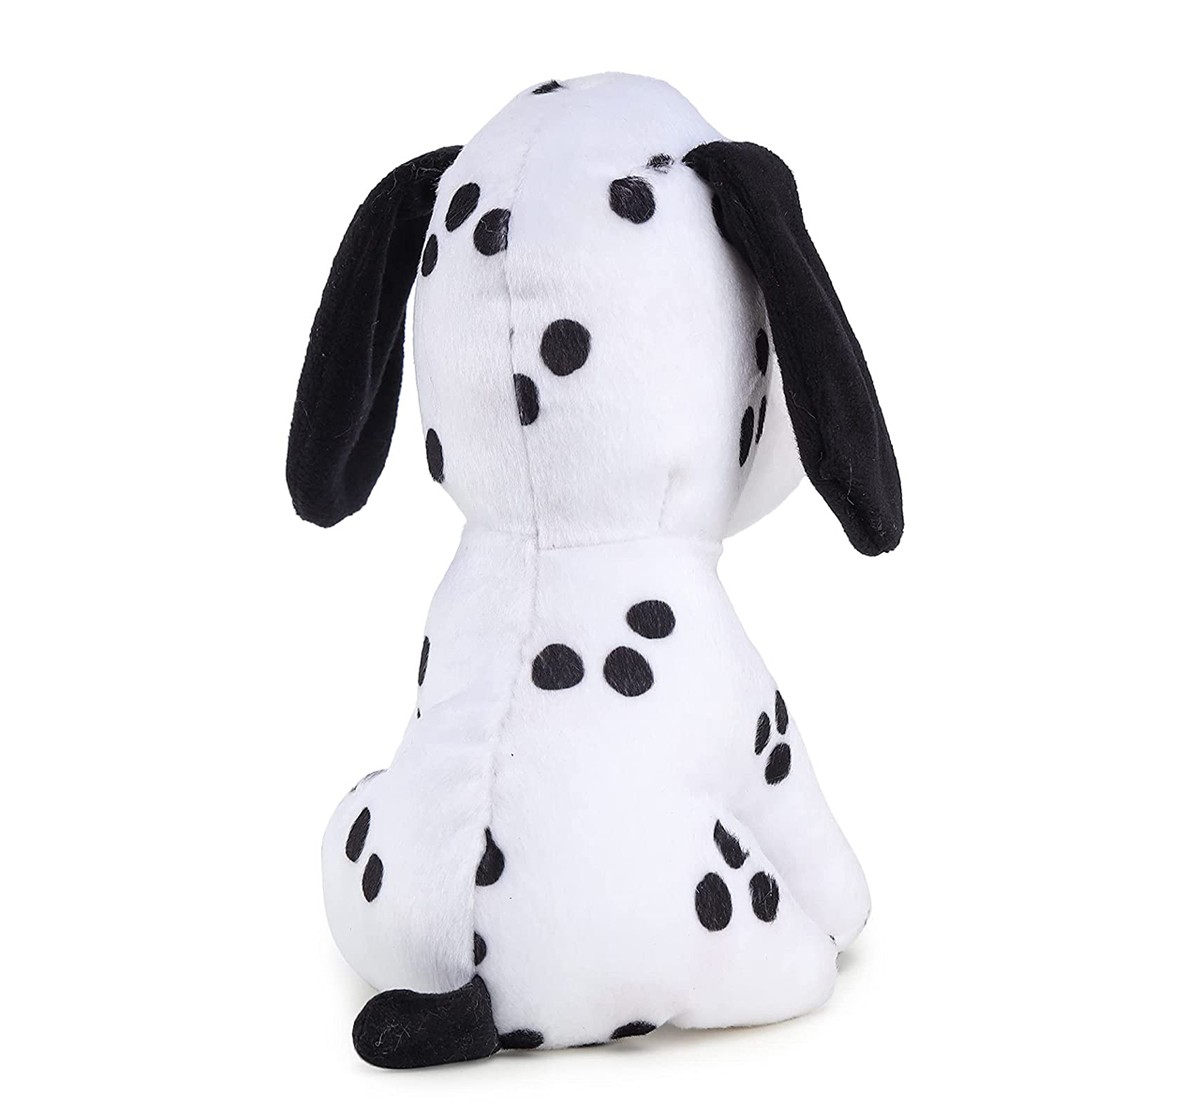 Soft Animal Plush Dalmatian Dog Plush Toy by Webby, 20 cm, White